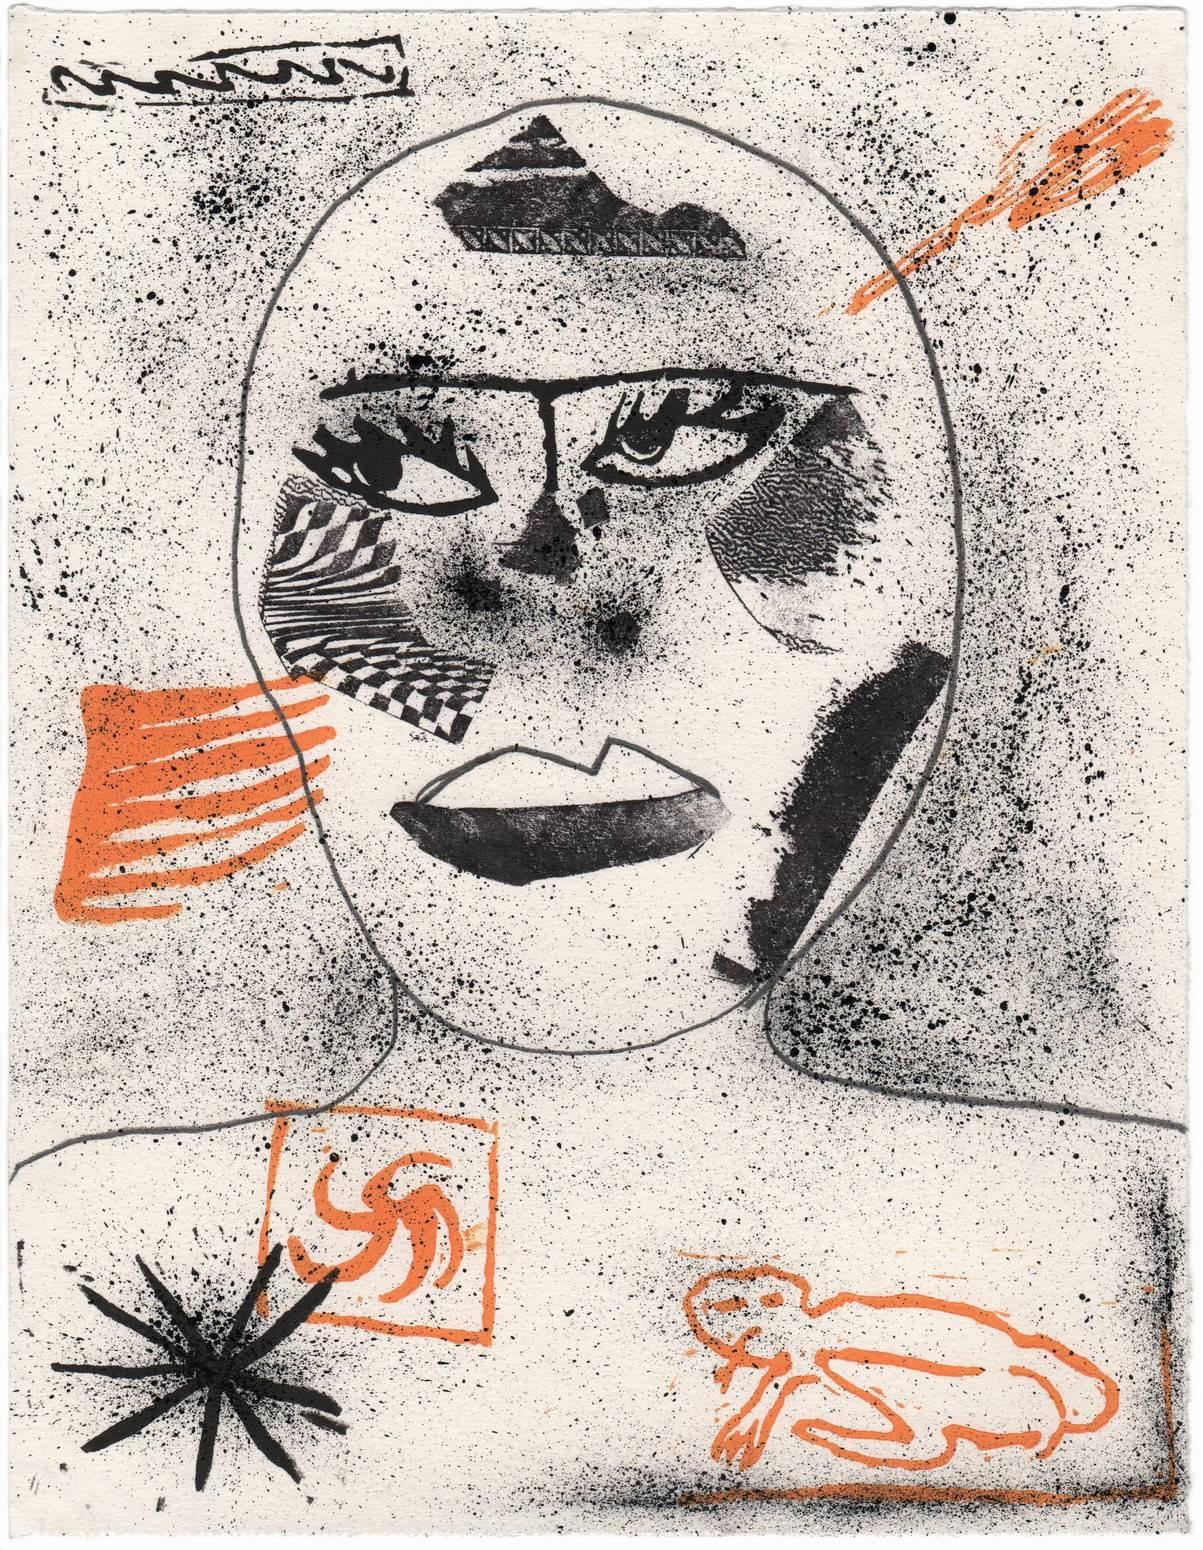 A Portrait of Gary Numan - Art by Olivia Gibb